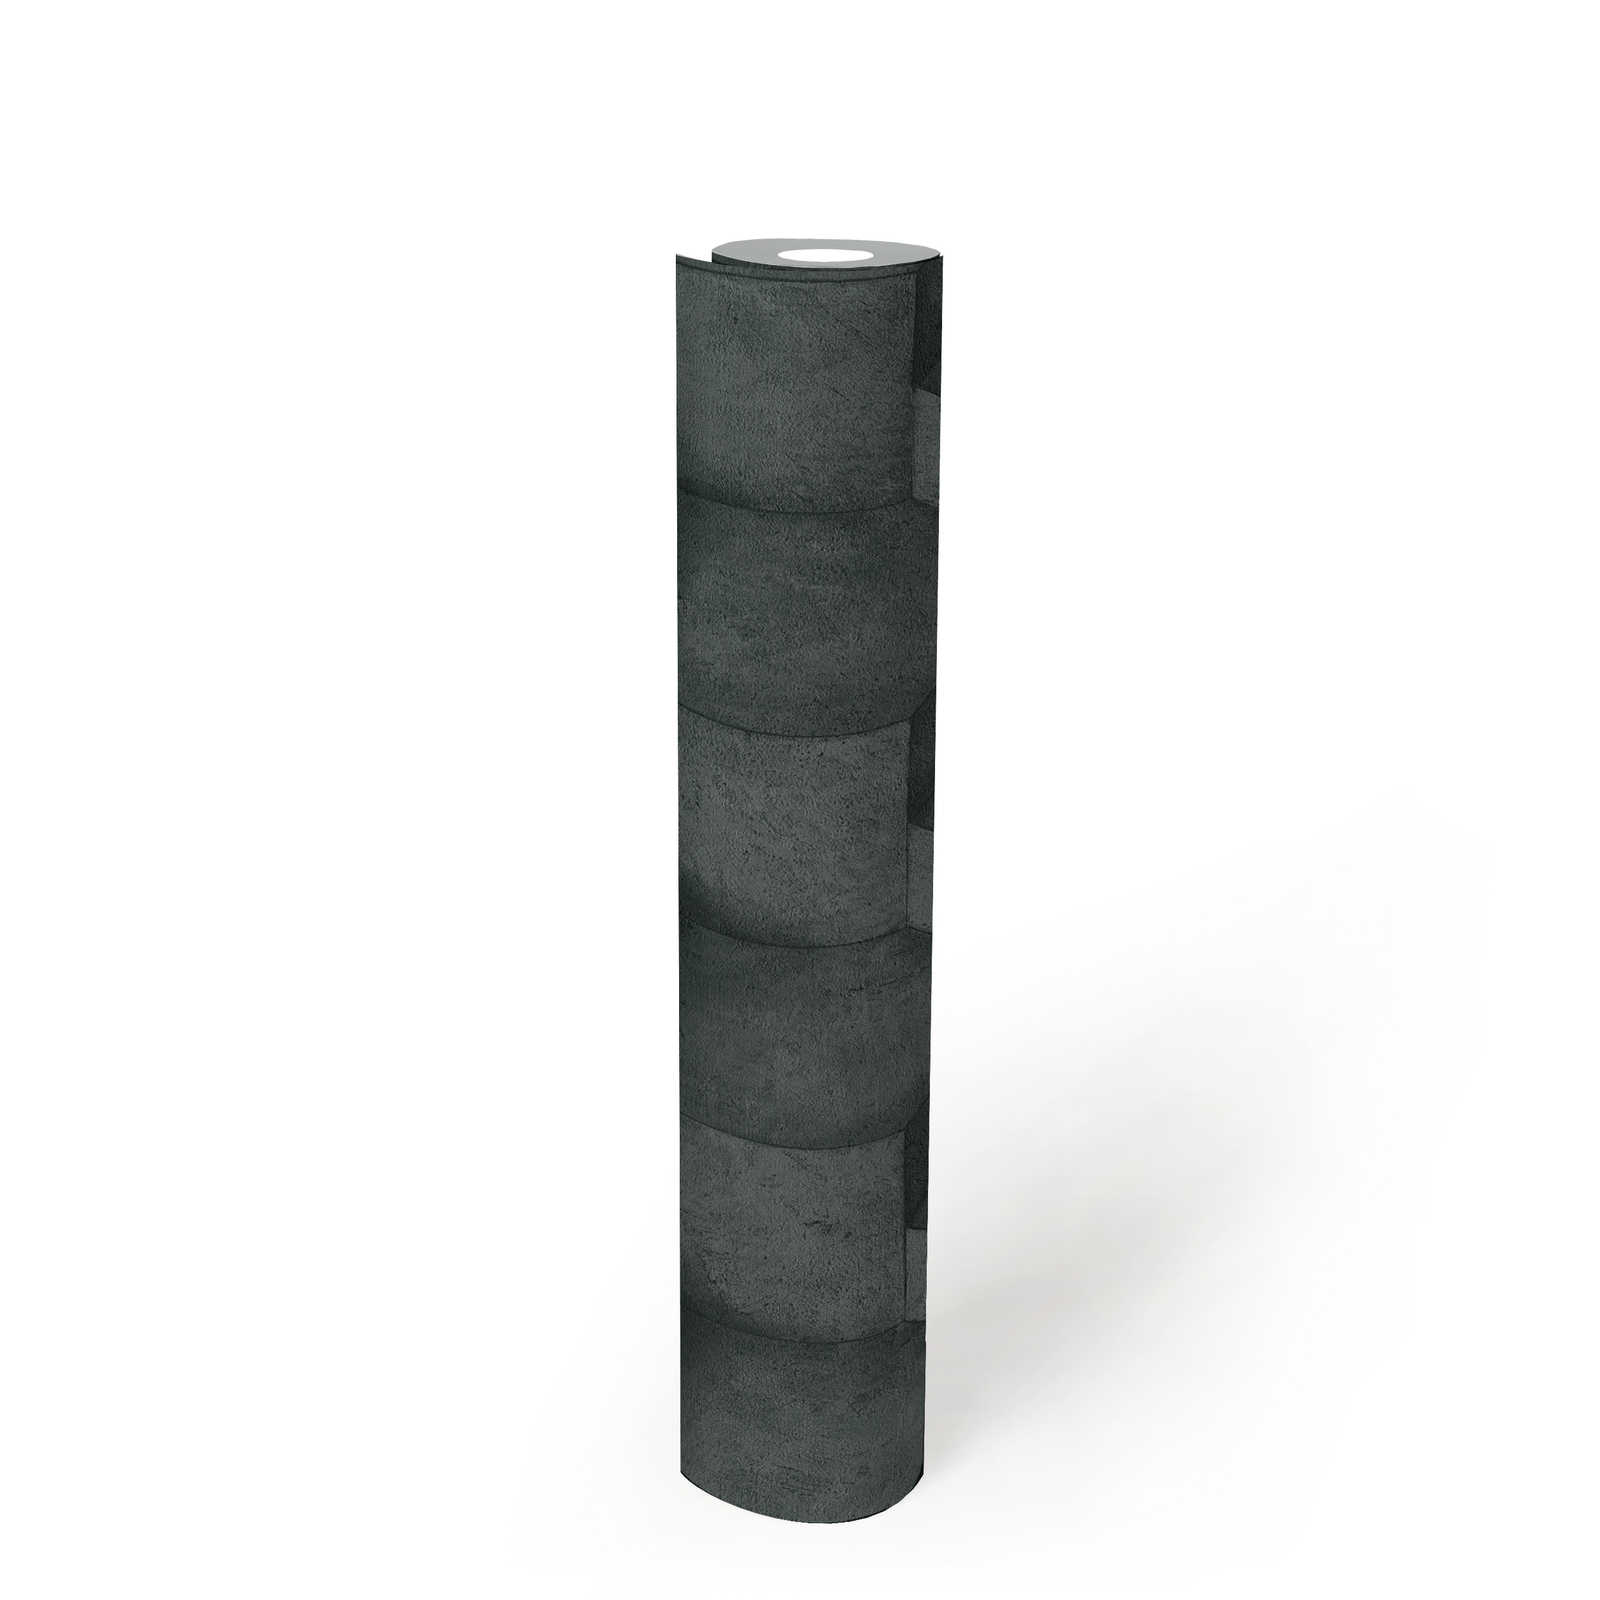             Papel pintado antracita con aspecto de hormigón 3D - negro, gris
        